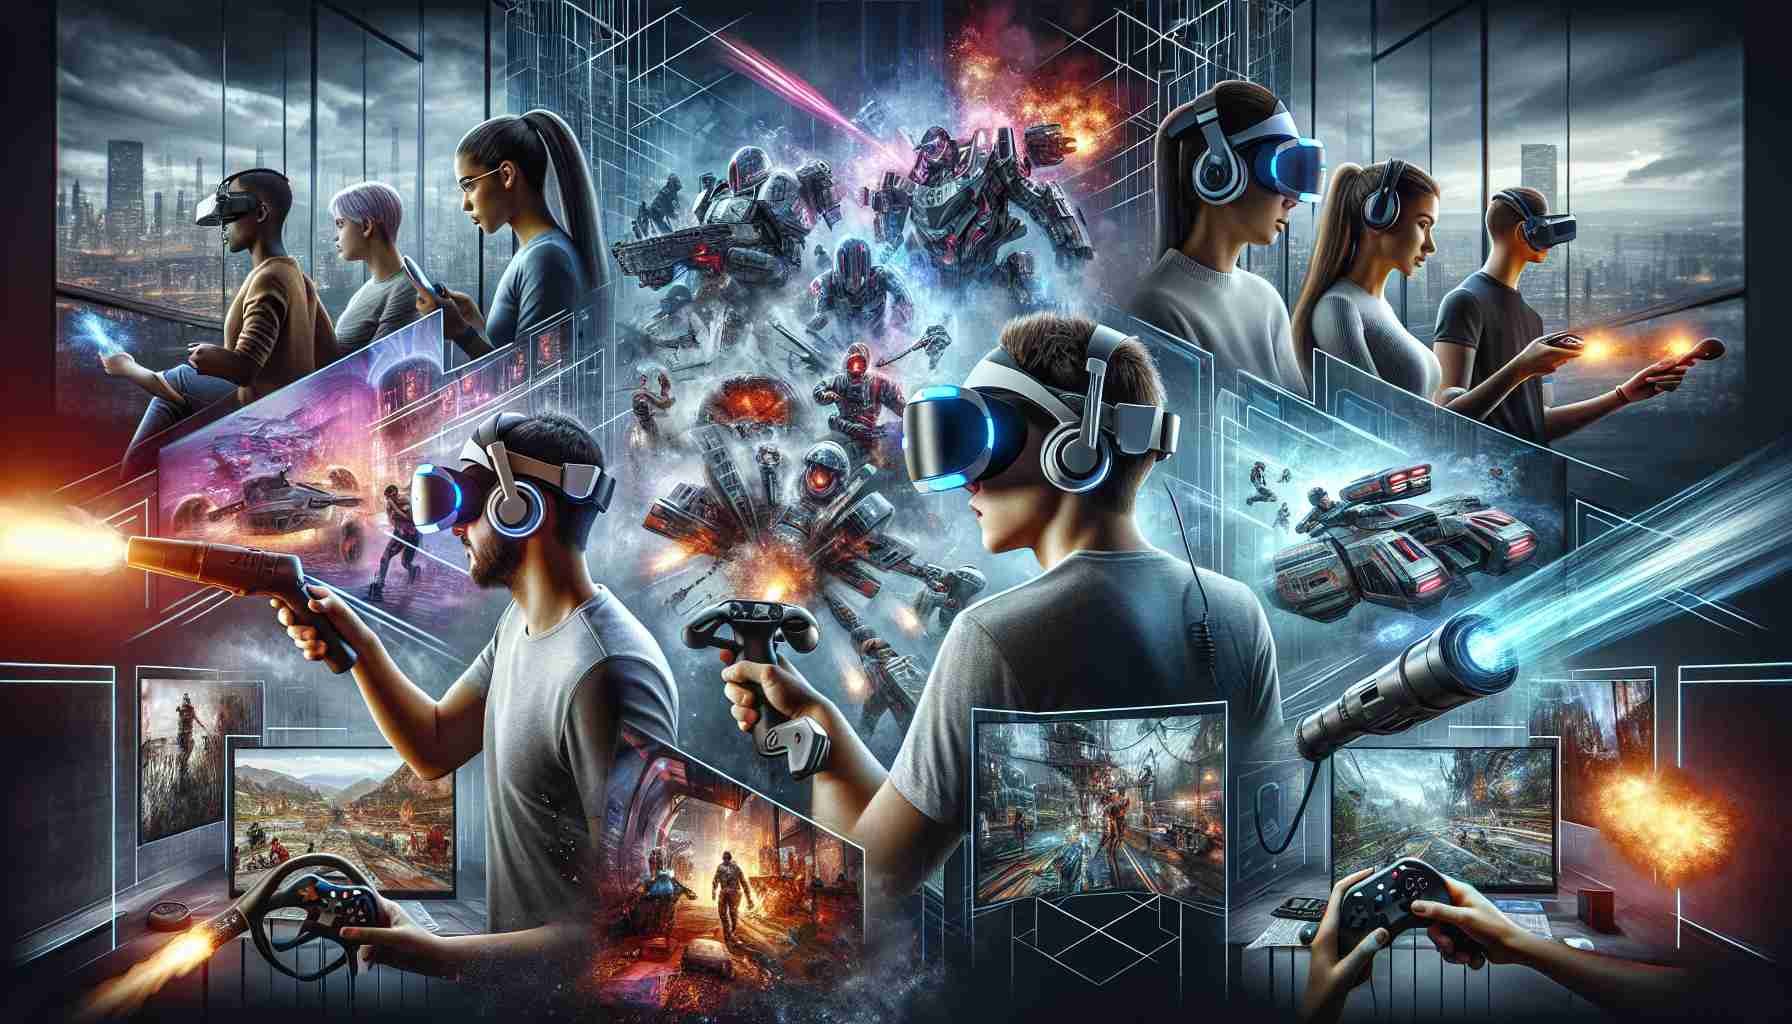 Amit Caesar The virtual reality games I like